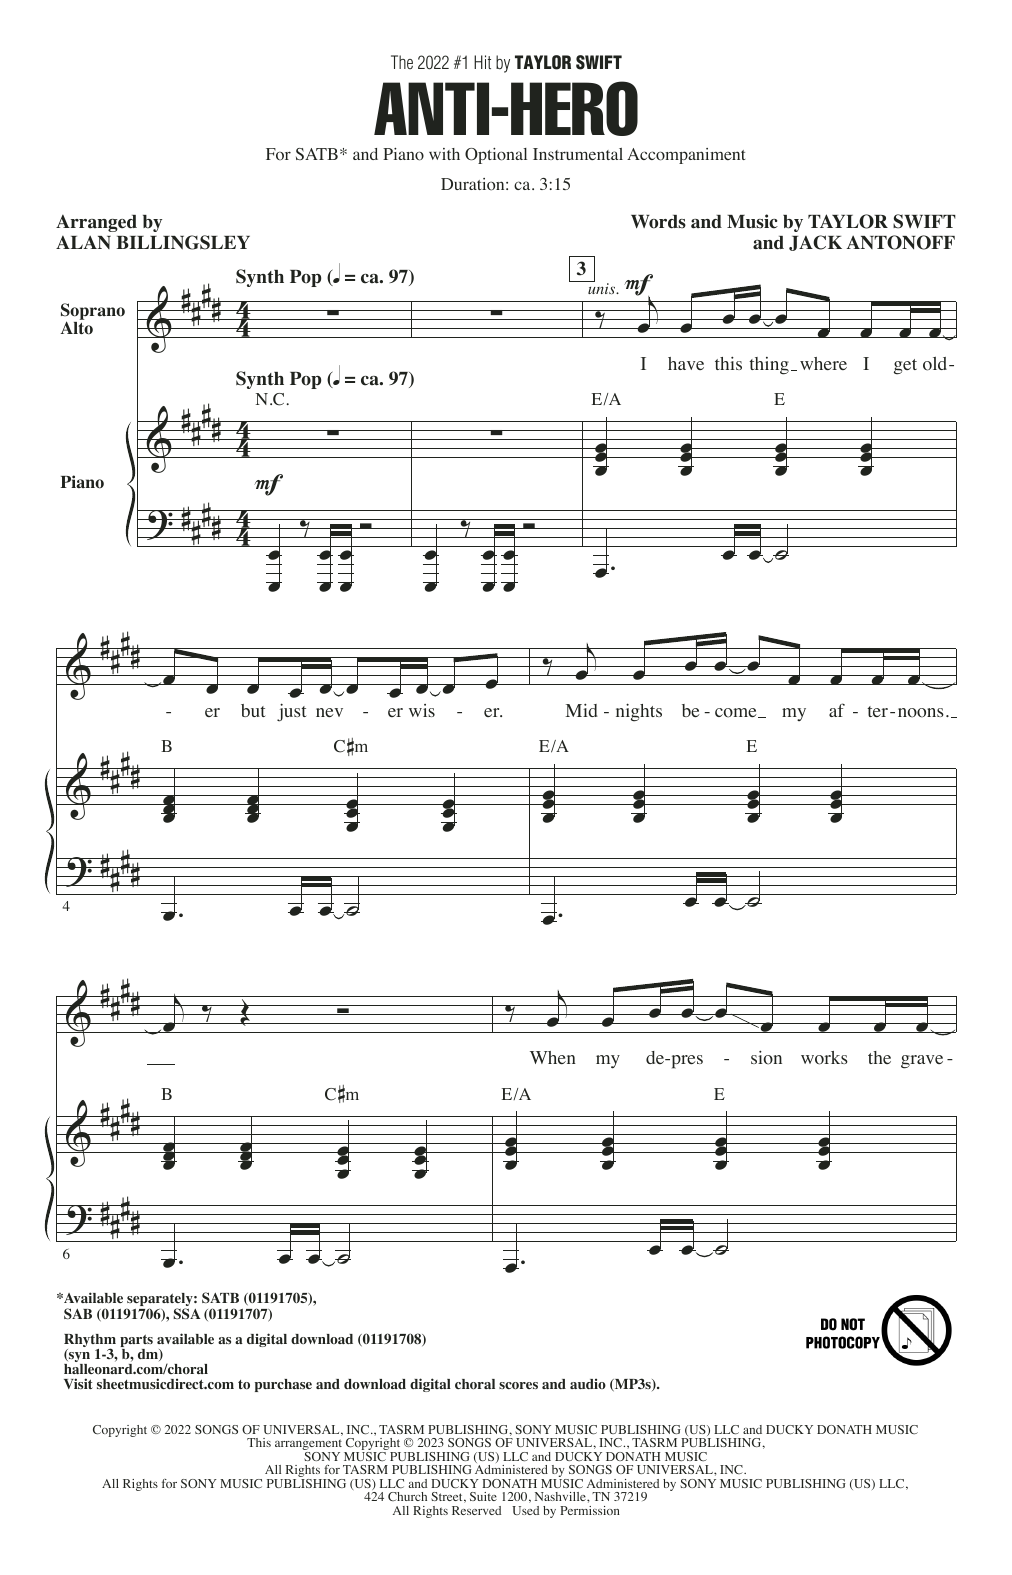 Taylor Swift Anti-Hero (arr. Alan Billingsley) Sheet Music Notes & Chords for SAB Choir - Download or Print PDF